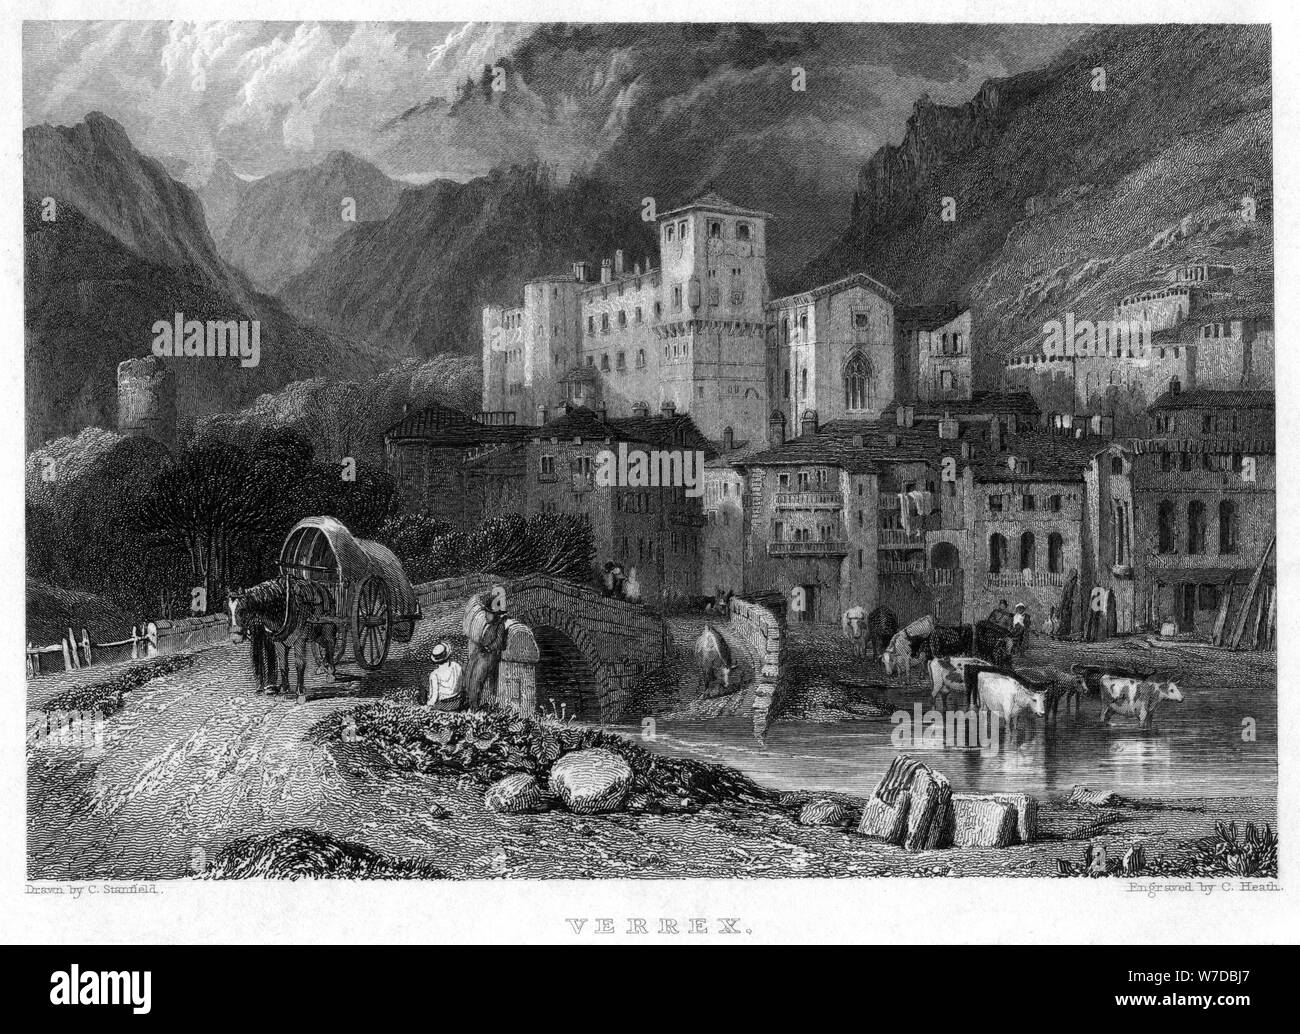 Verrex, Val d'Aosta, Italia, xix secolo. Artista: C Heath Foto Stock